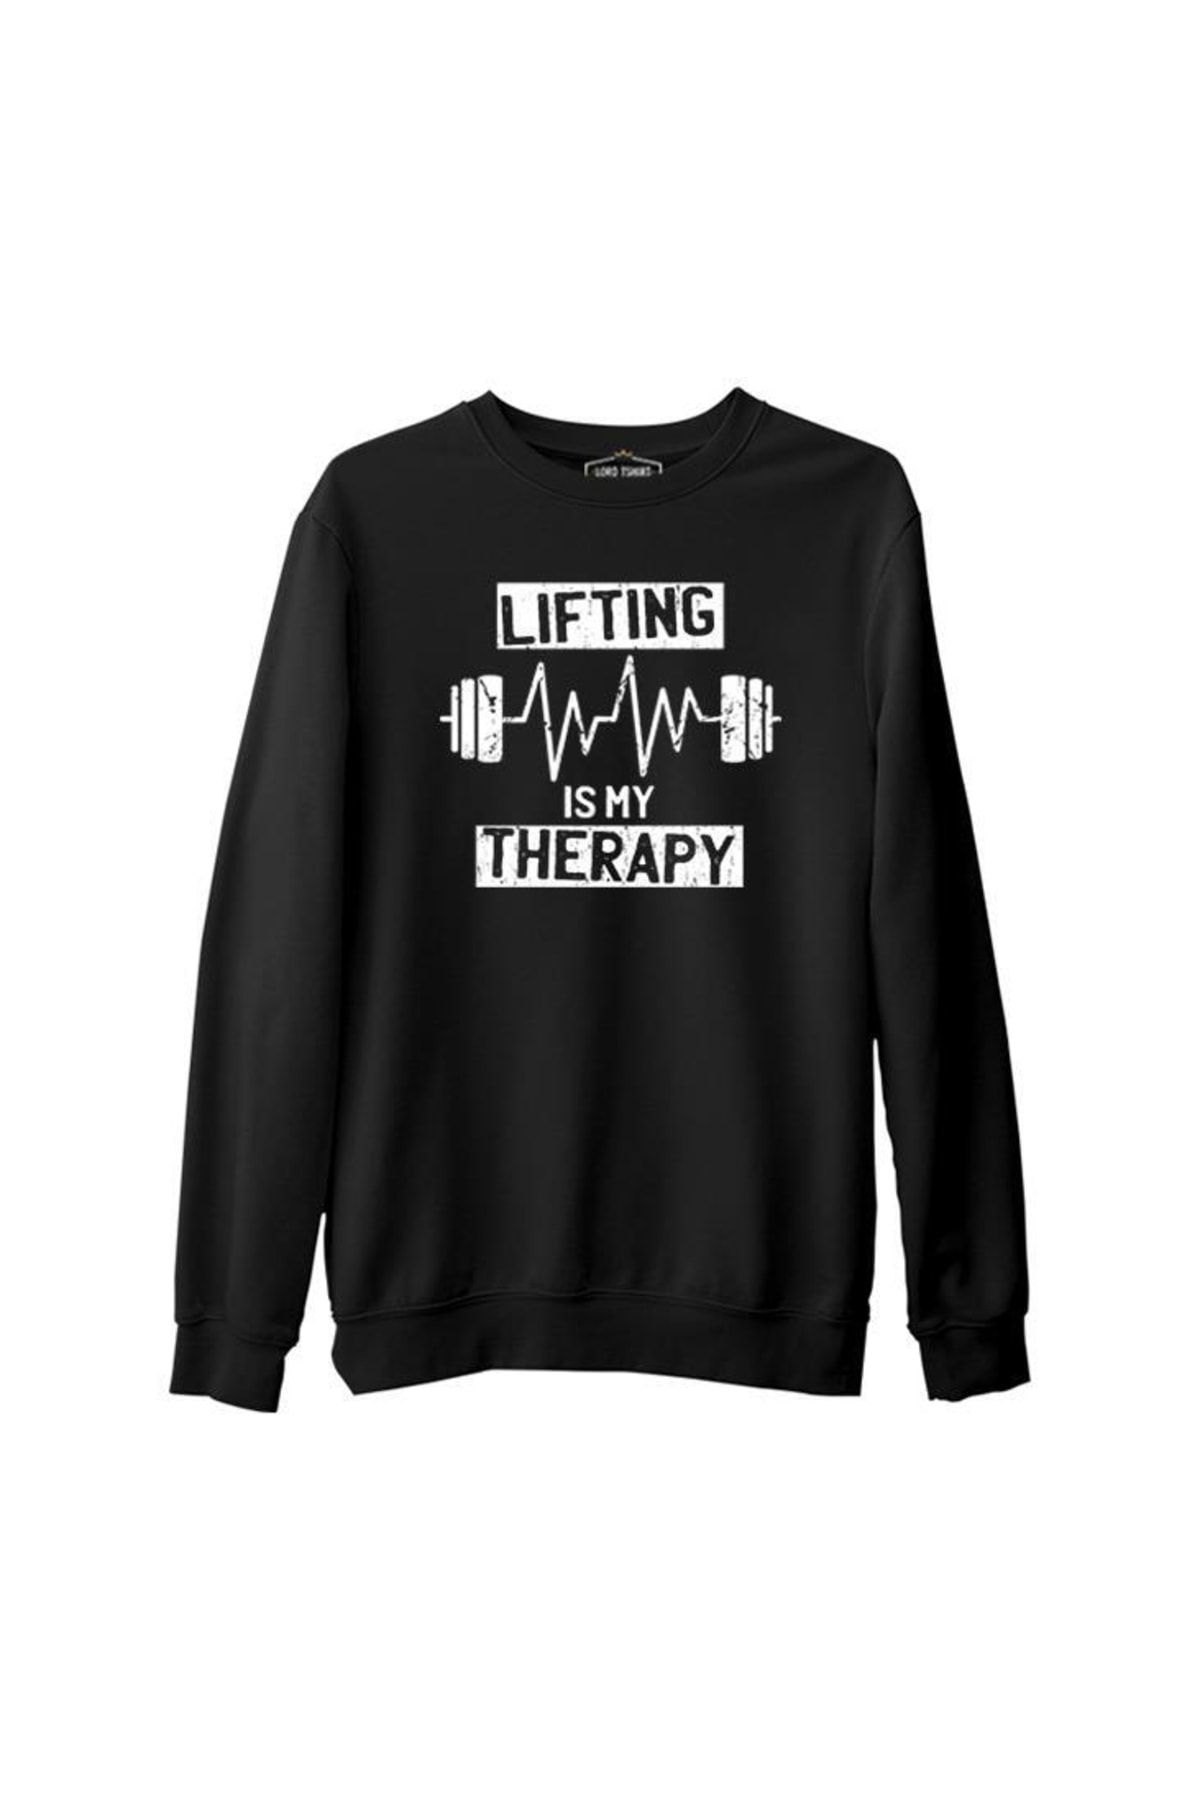 Lord T-Shirt Bodybuilding Lifting Theraphy Siyah Erkek Kalın Sweatshirt